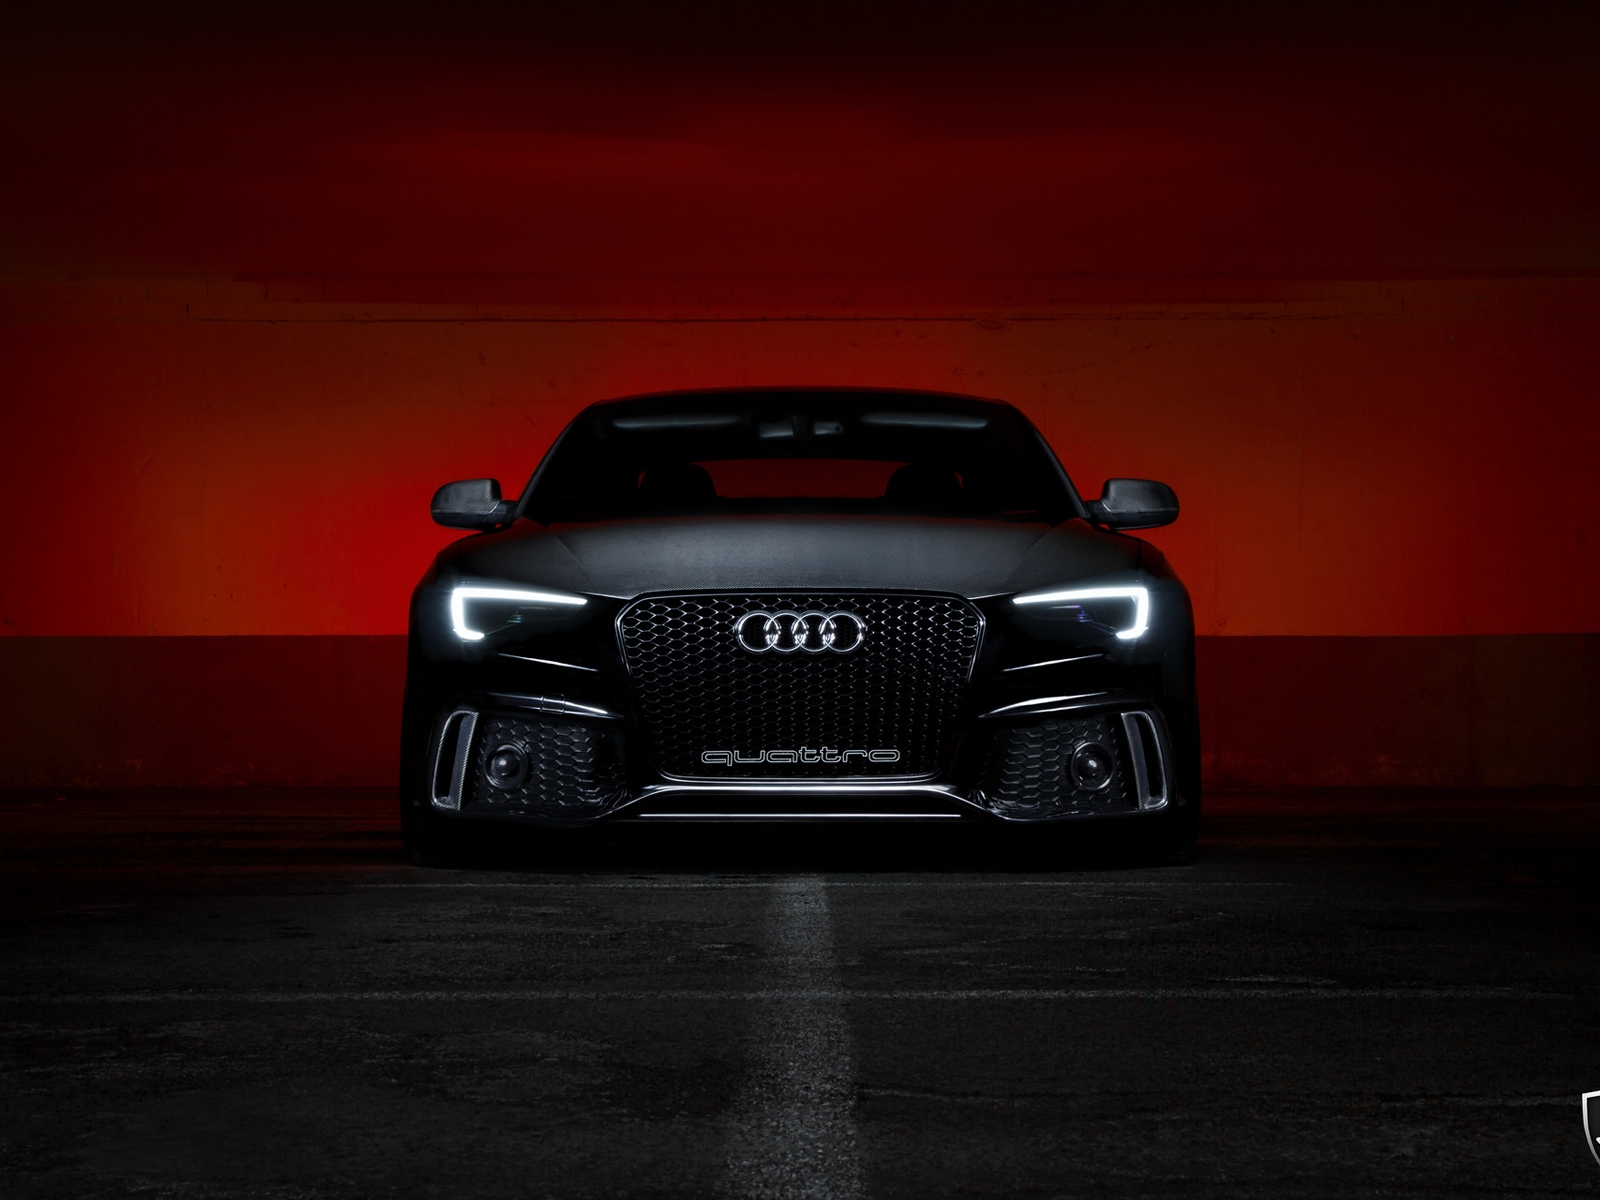 Audi S5 Black for 1600 x 1200 resolution